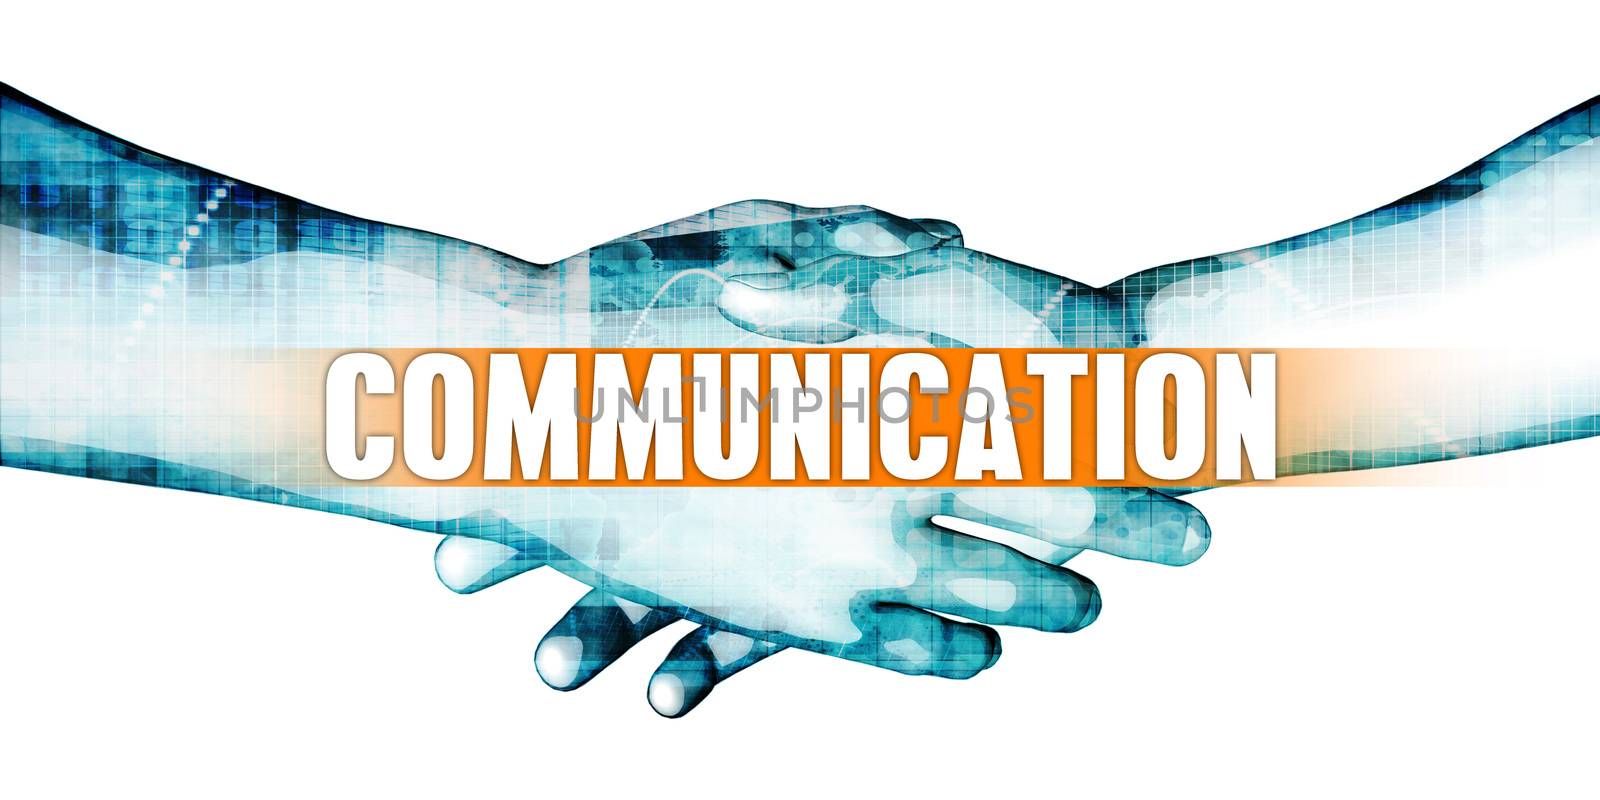 Communication by kentoh